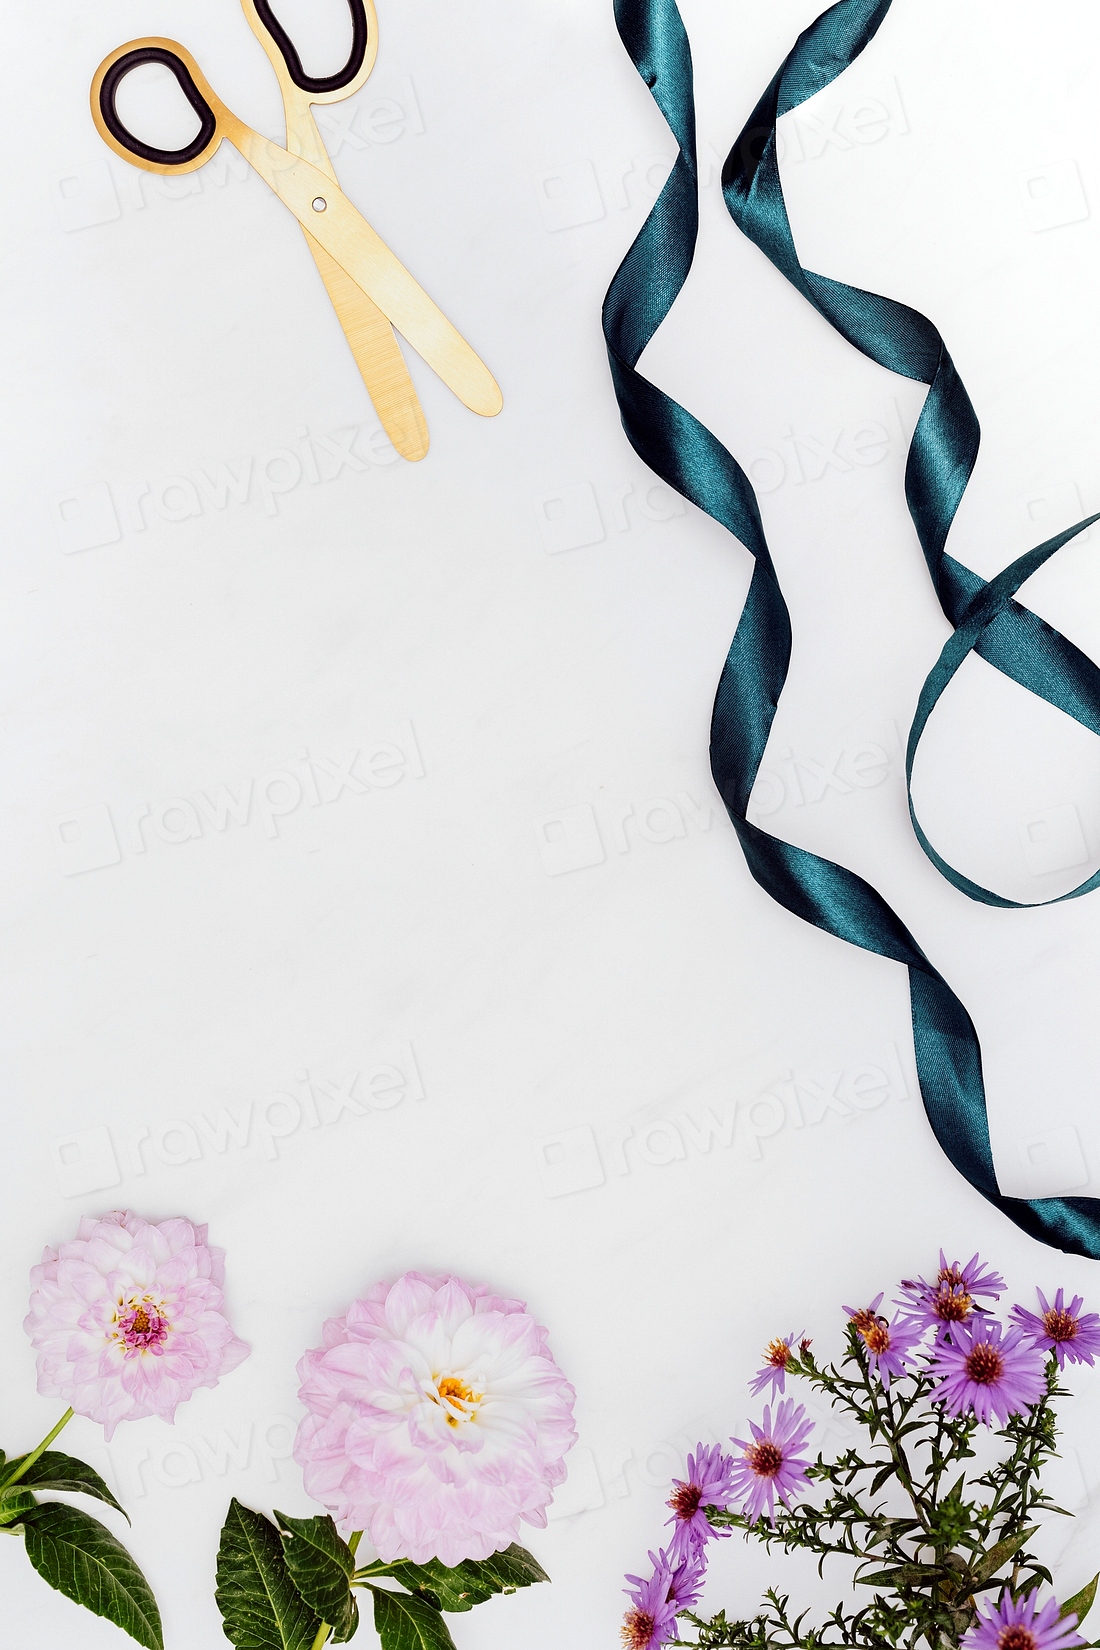 Feminine ornaments decorated white background | Premium Photo - rawpixel